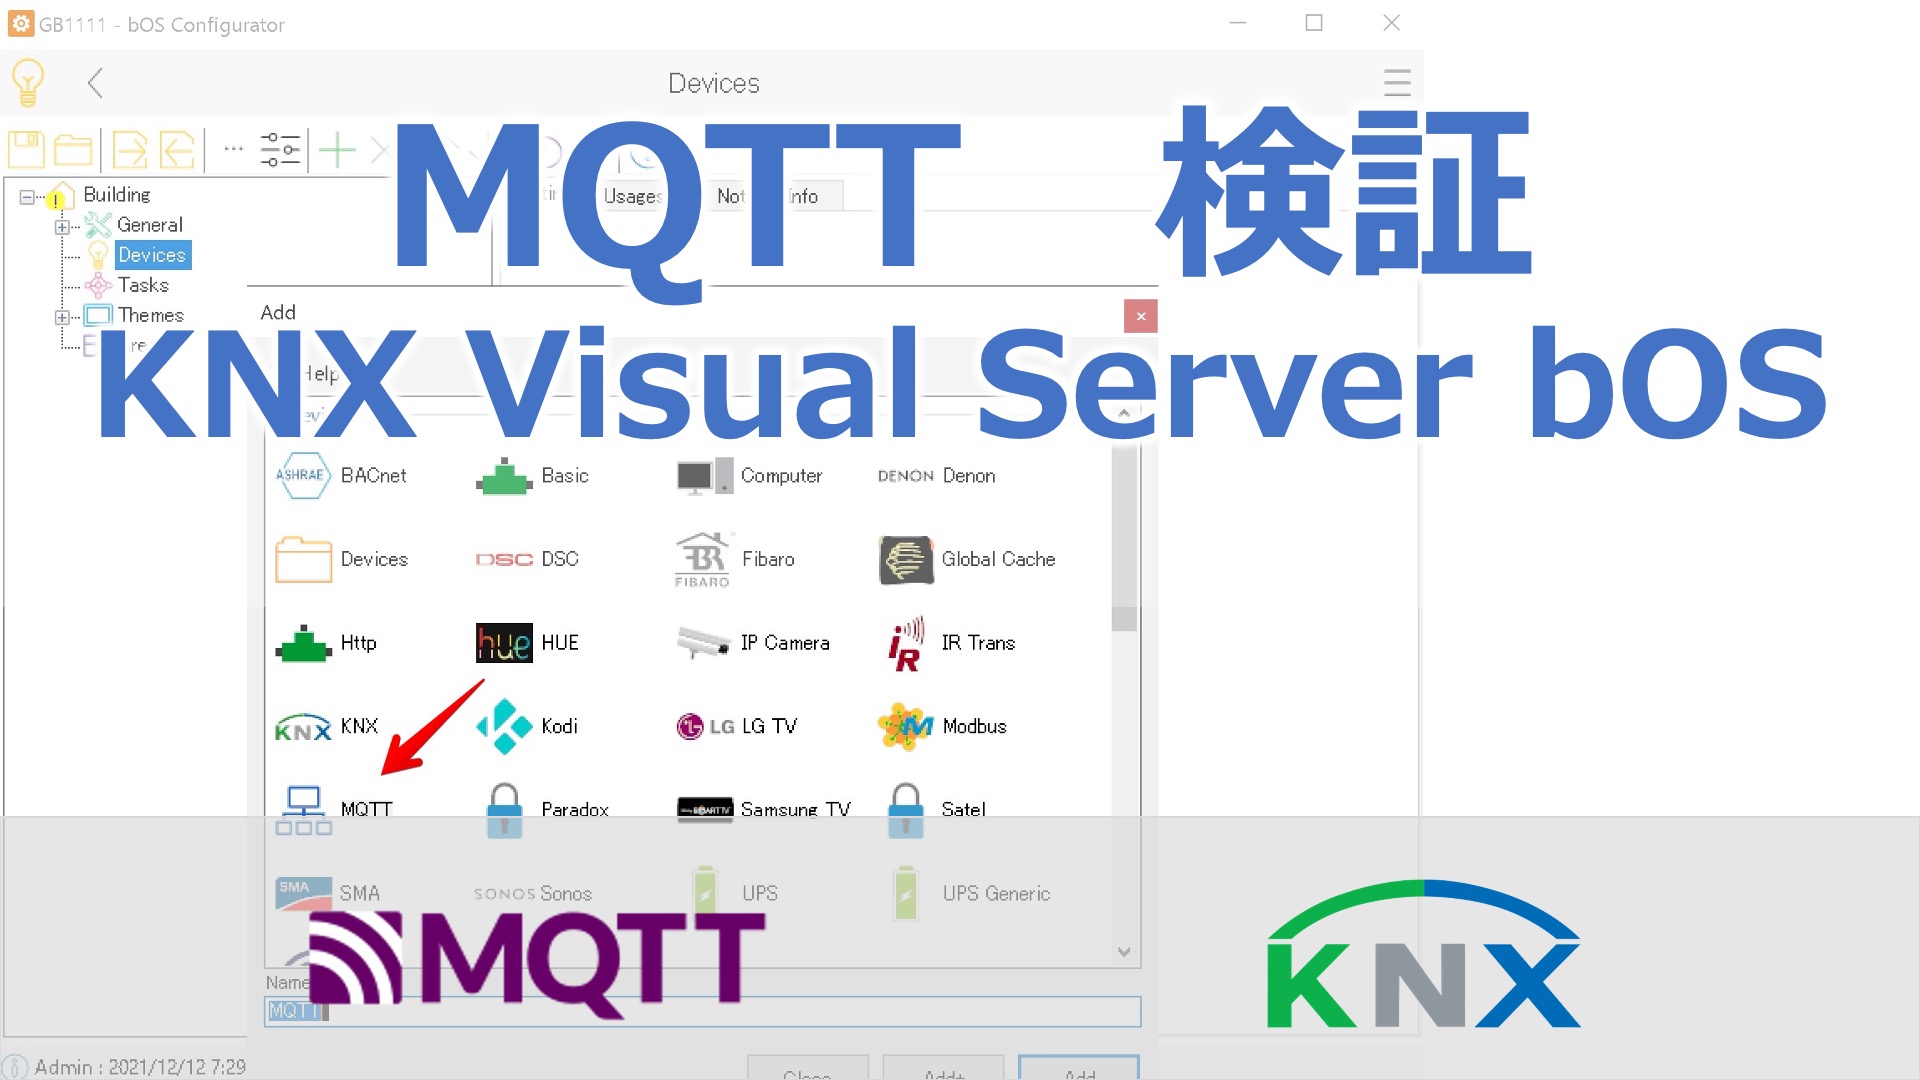 KNX Visual Server bOSでMQTT機能が追加されたので検証してみた